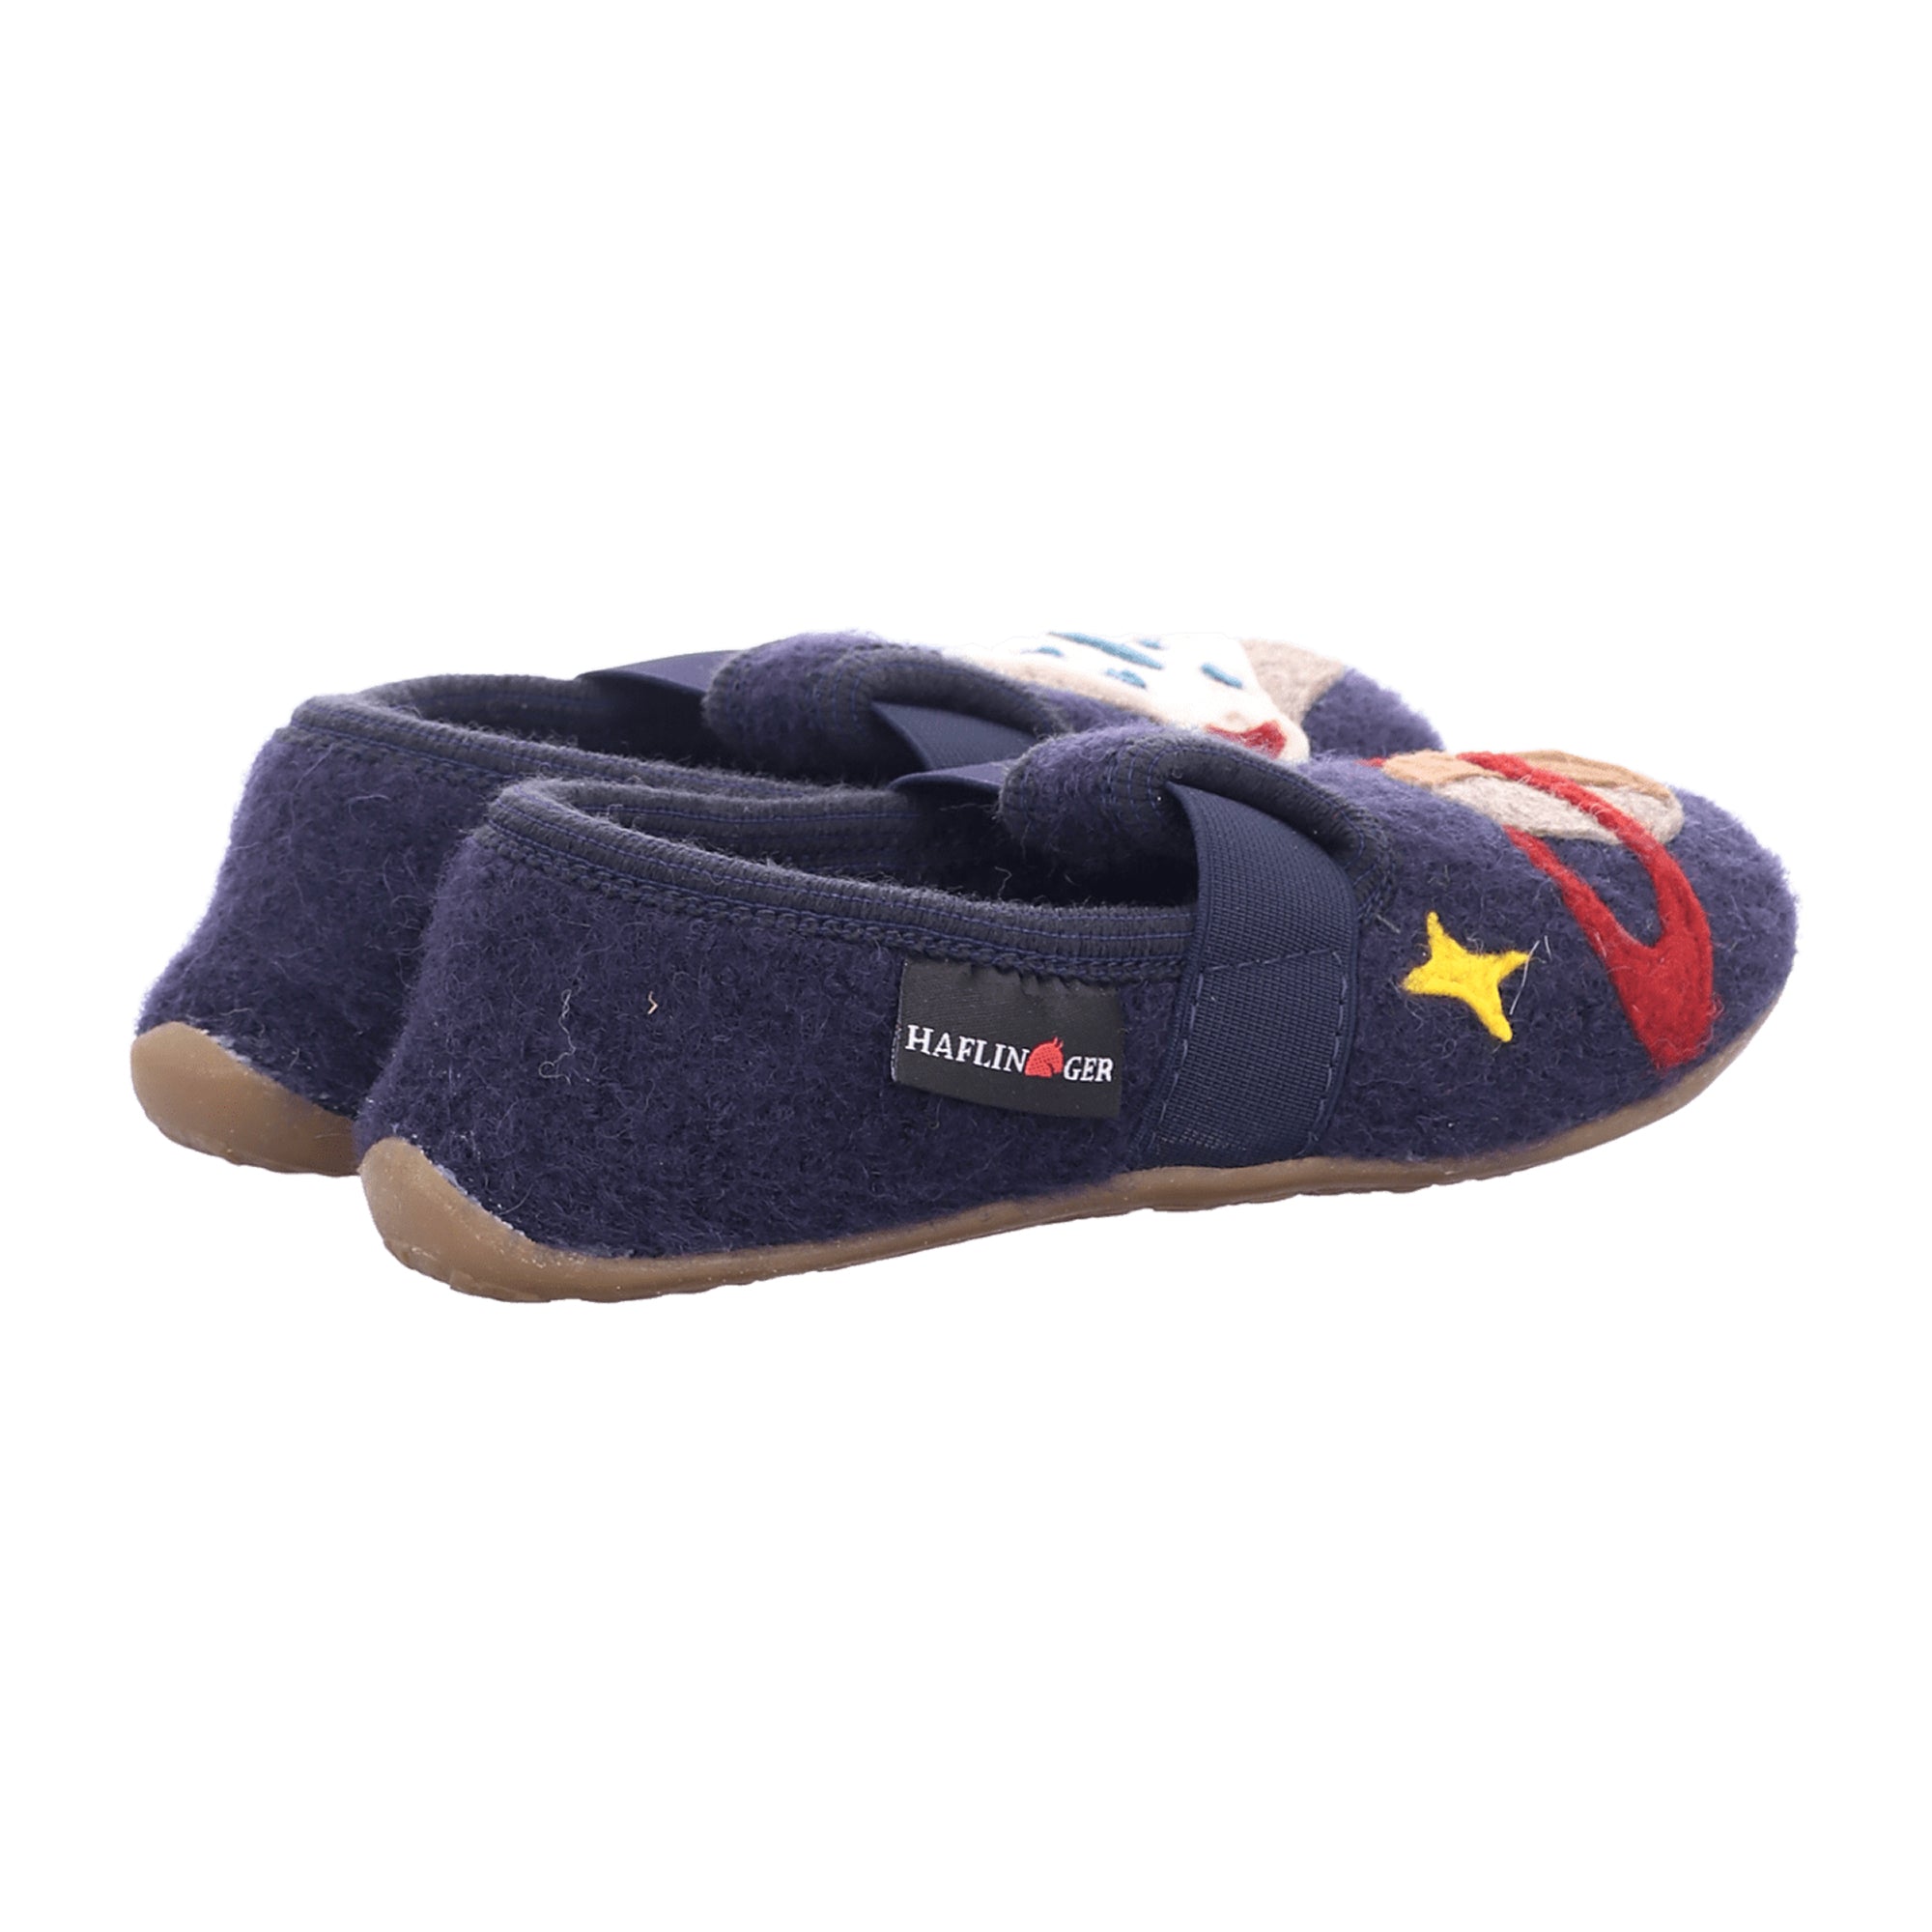 Haflinger Everest Rocket Kids Slippers - Durable Blue Wool, Comfortable & Stylish